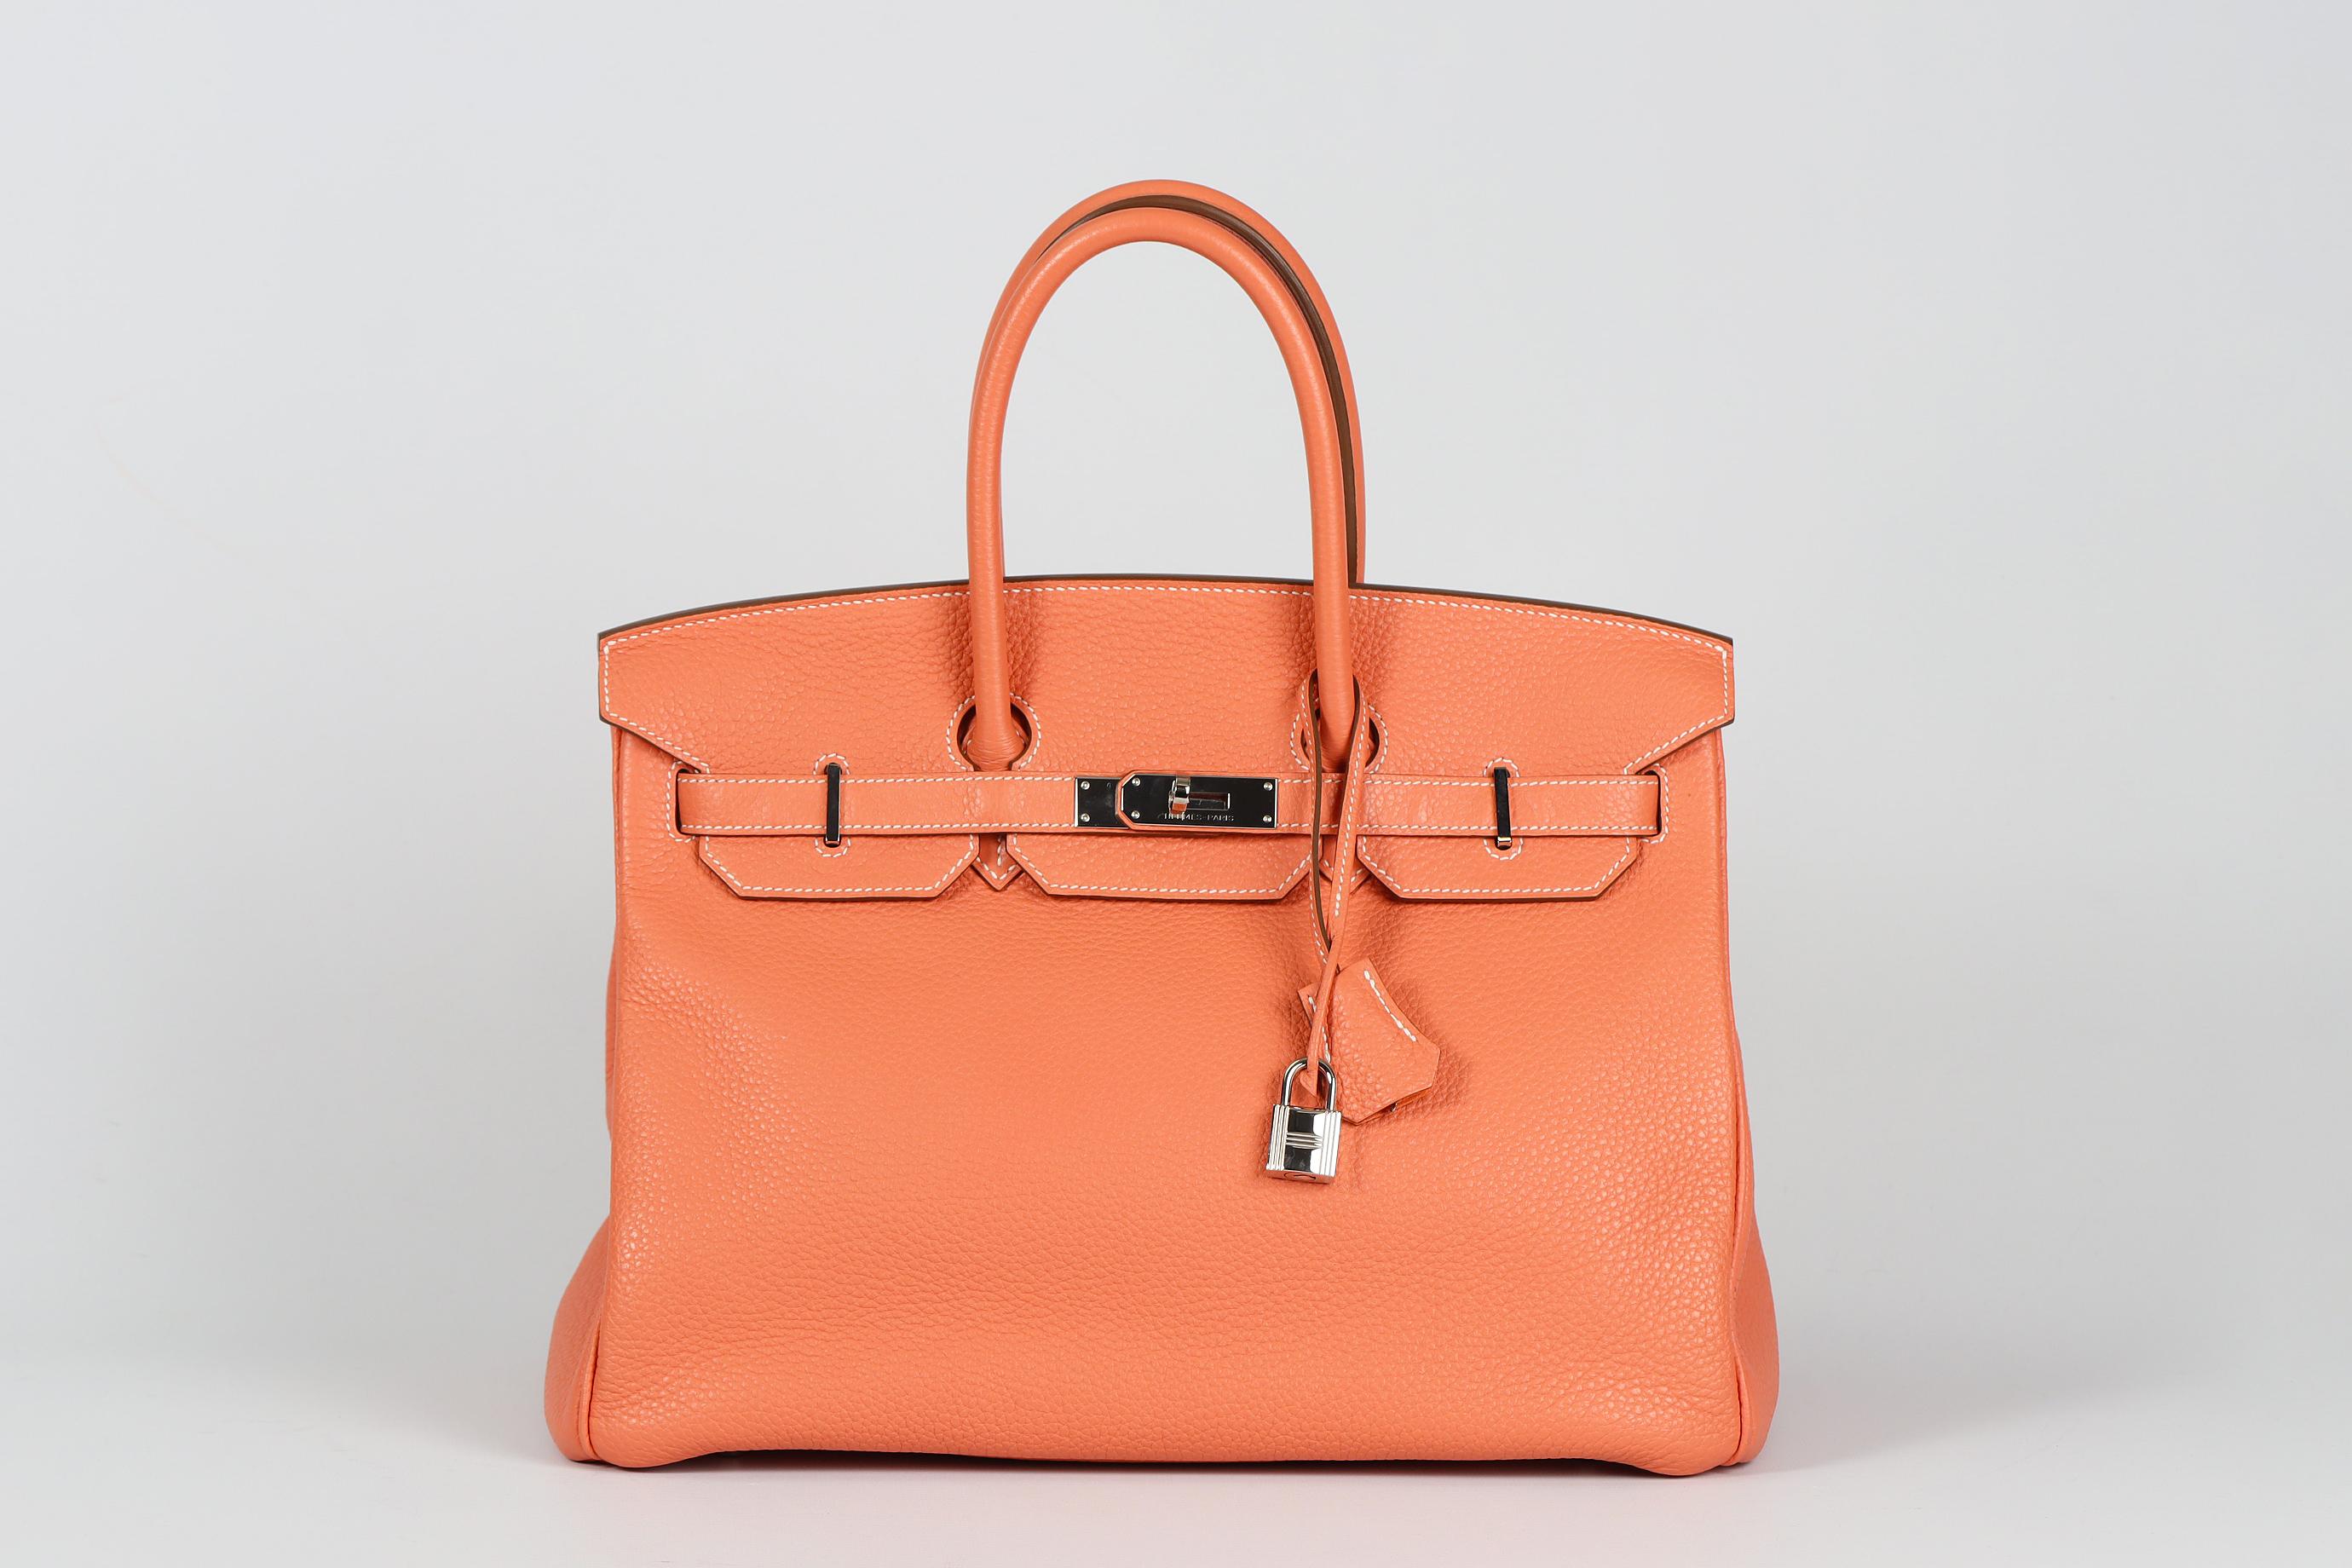 <ul>
<li>Hermès 2013 Birkin 35Cm Clemence Leather Bag.</li>
<li>Salmon Pink.</li>
<li>Made in France, this beautiful 2013 Hermès ‘Birkin’ handbag has been made from salmon-pink ‘Clemence’ leather exterior in ‘Crevette’ with matching leather